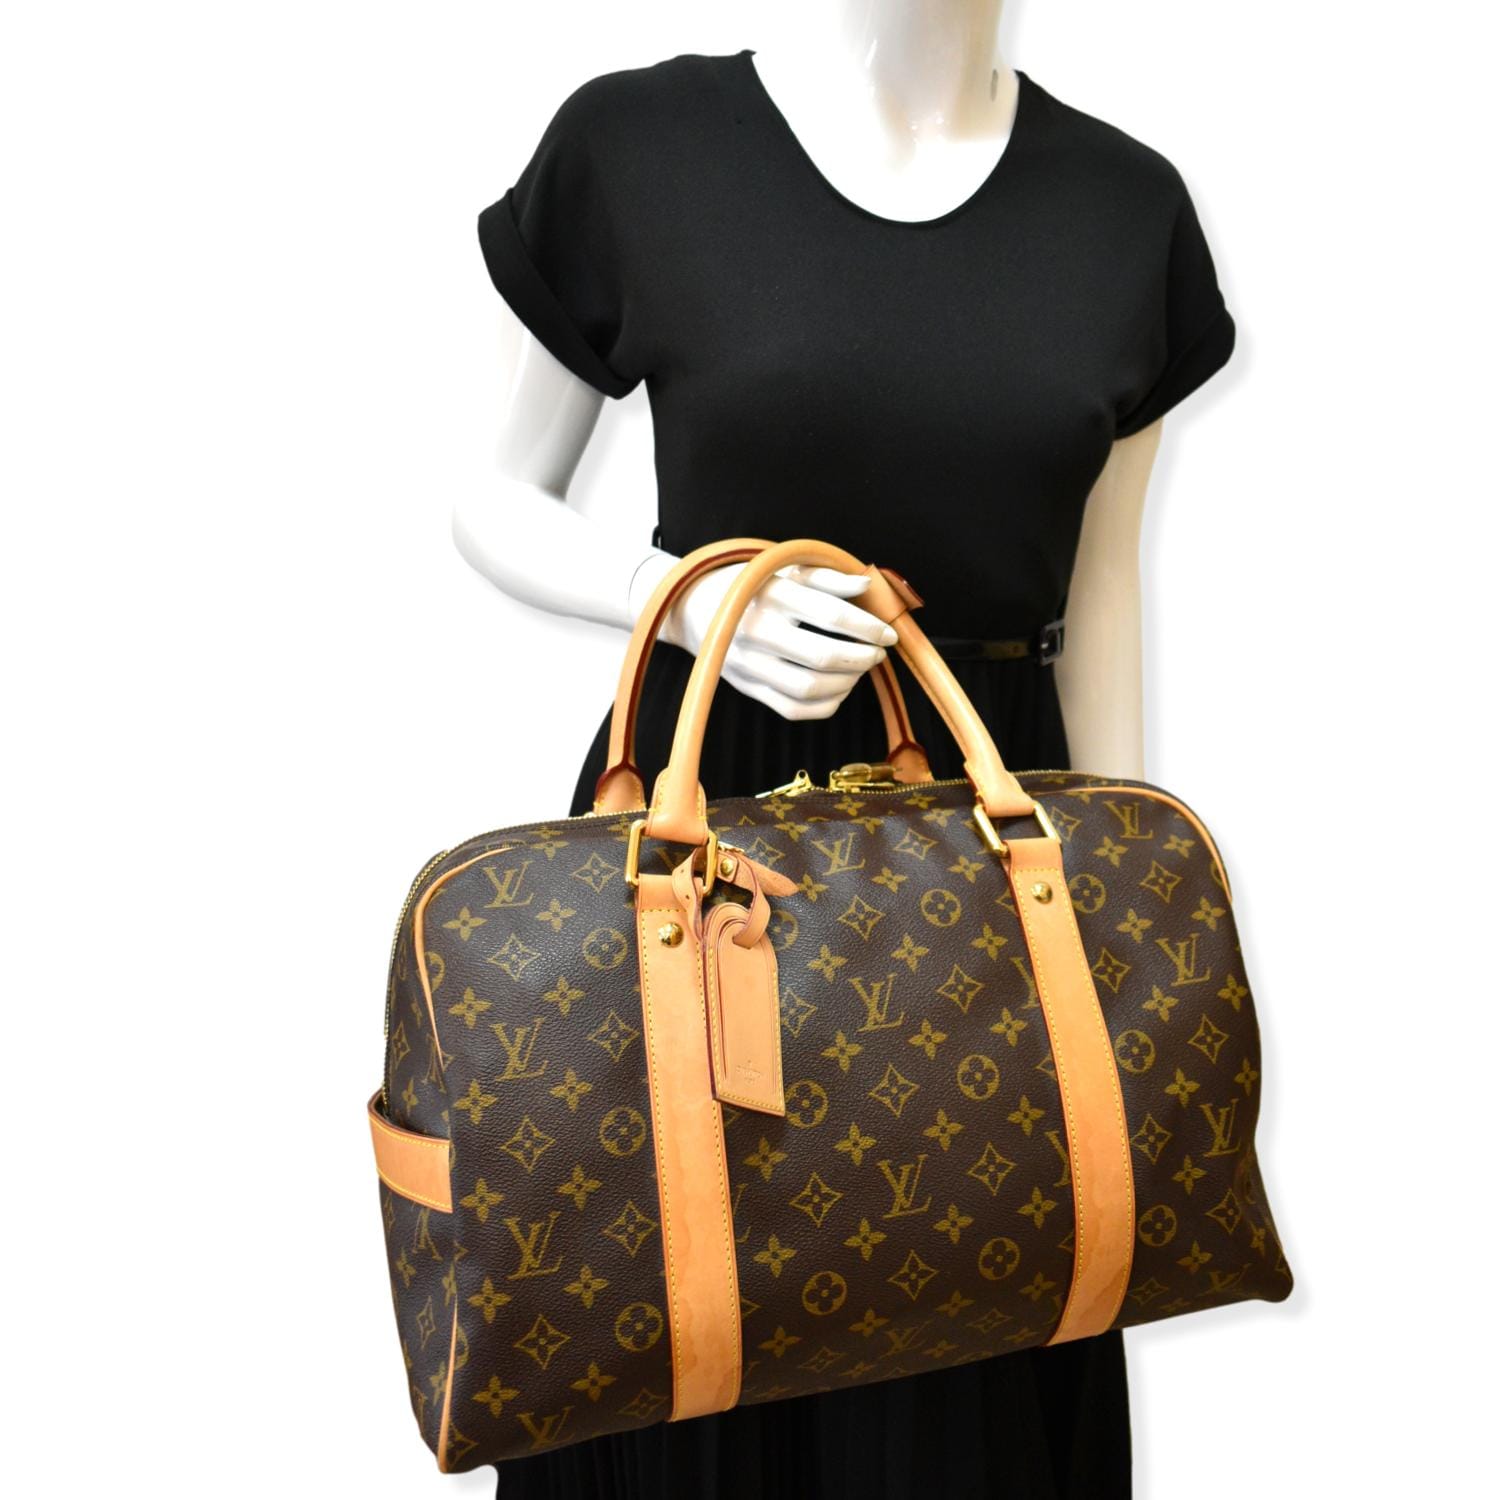 Louis Vuitton Carryall Handbag